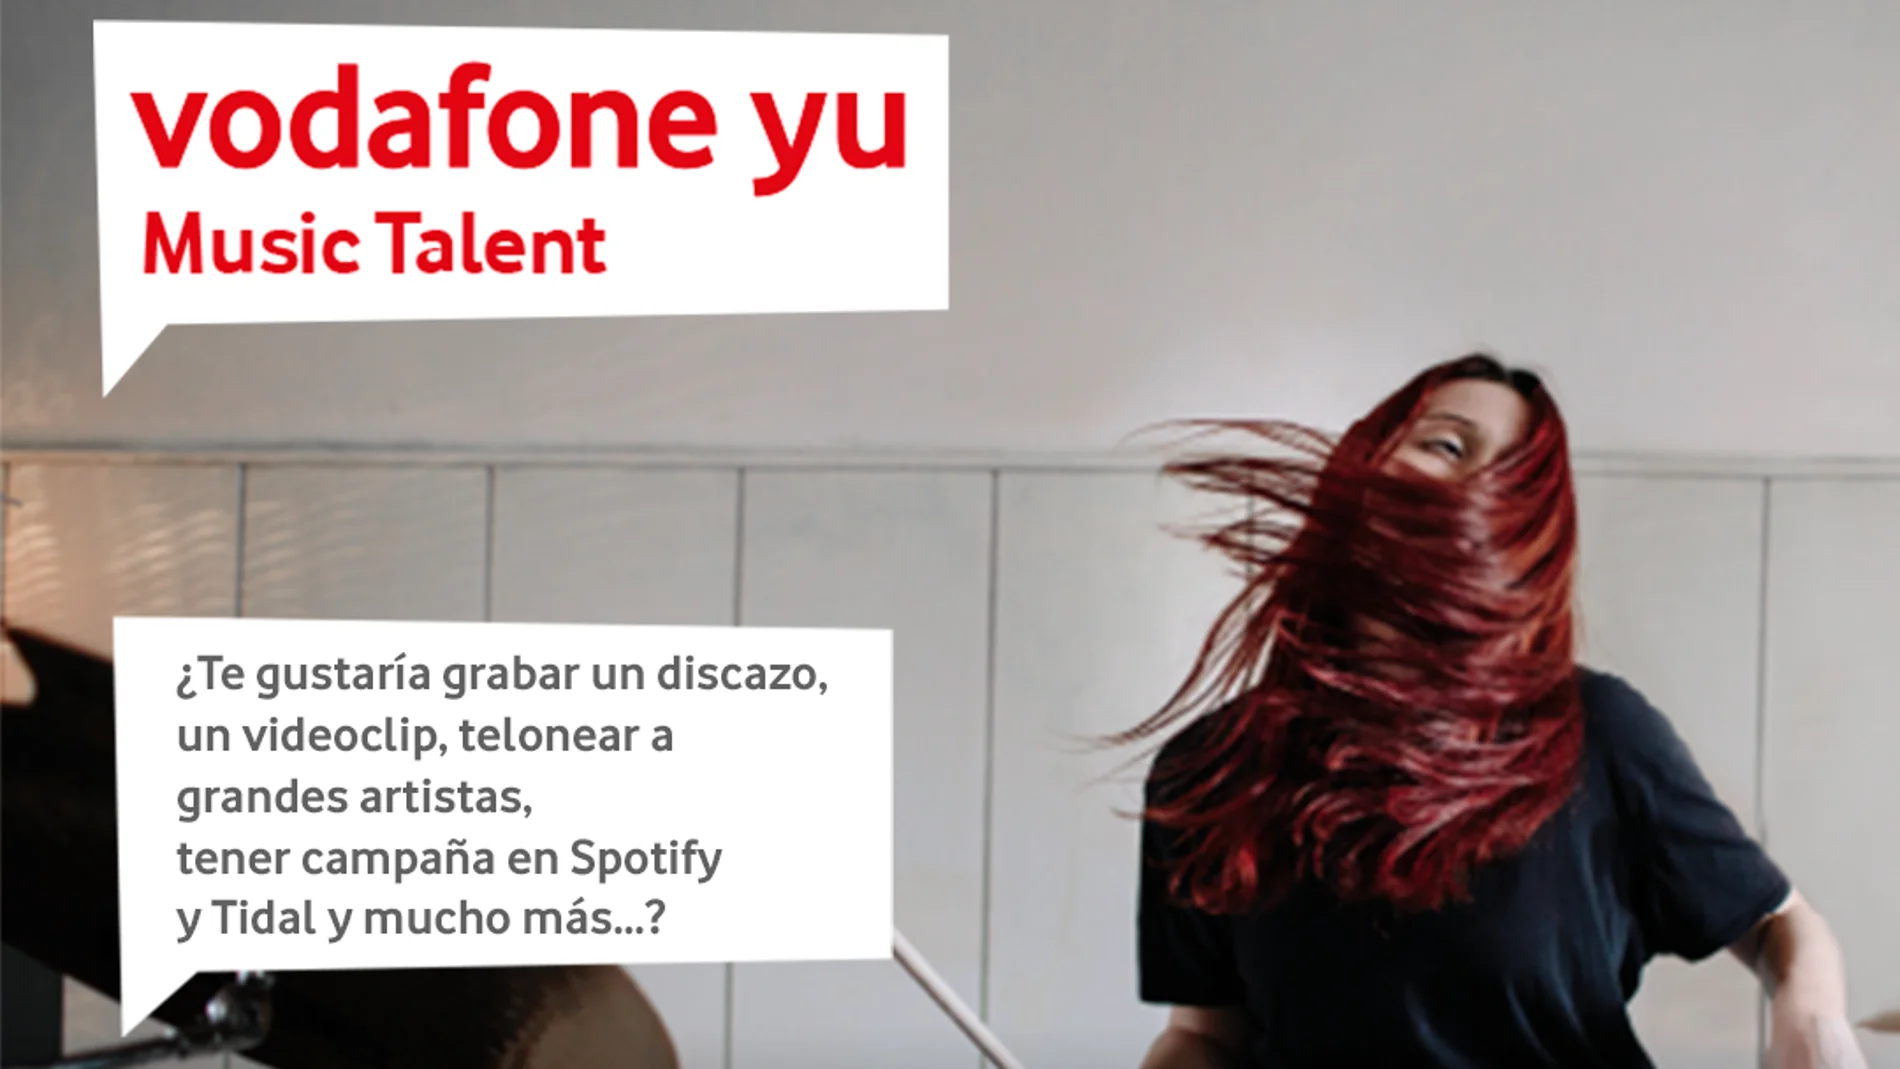 Vodafone yu Music Talent 2021